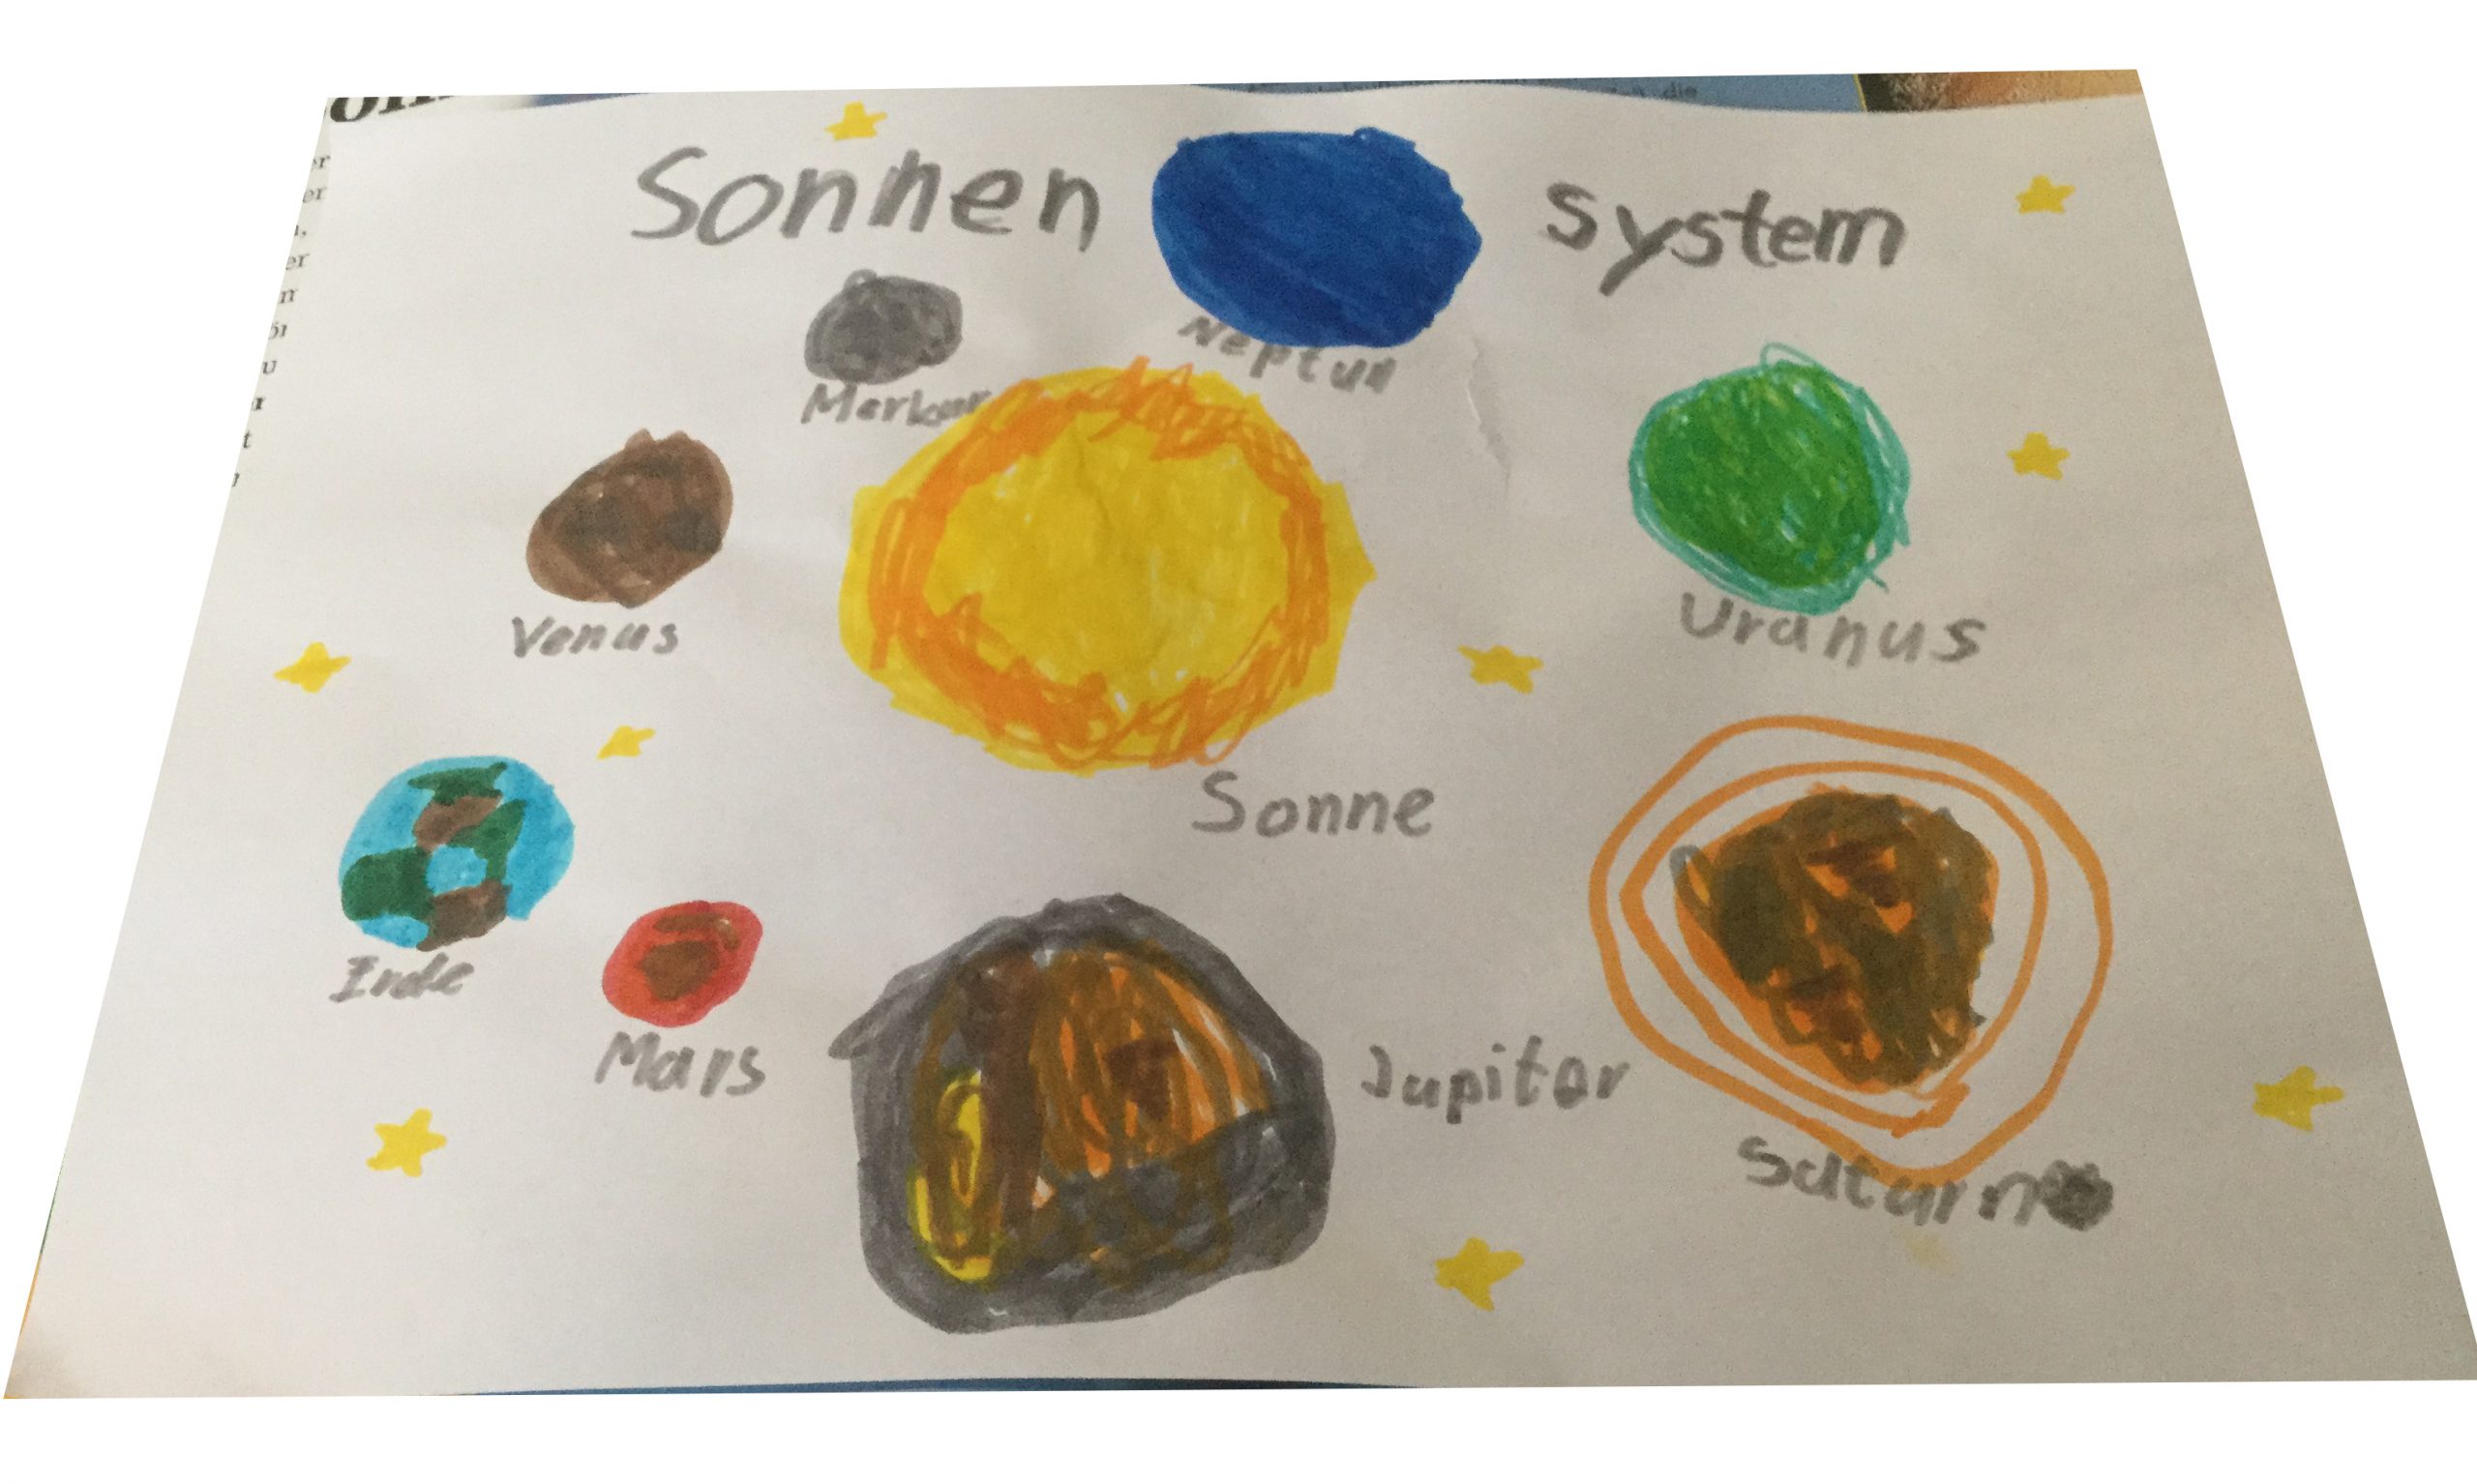 Sonnen system